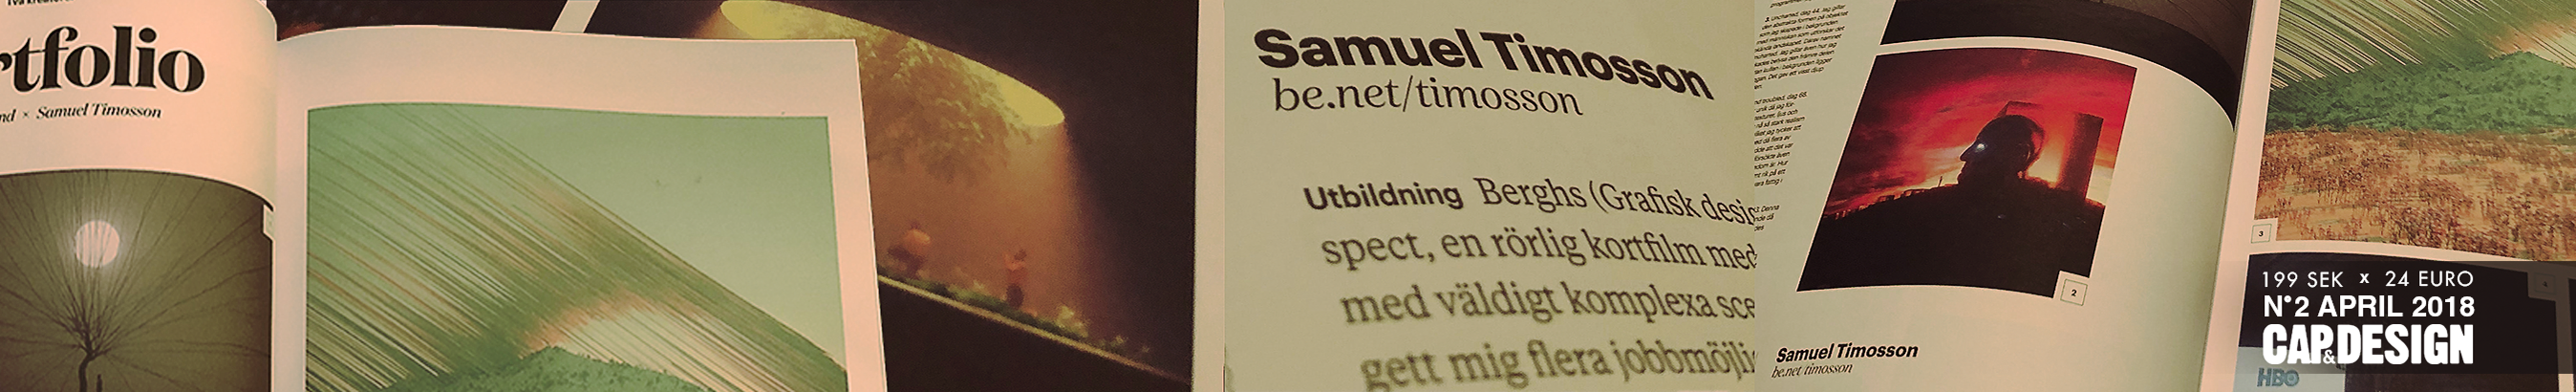 Banner de perfil de Samuel Timosson